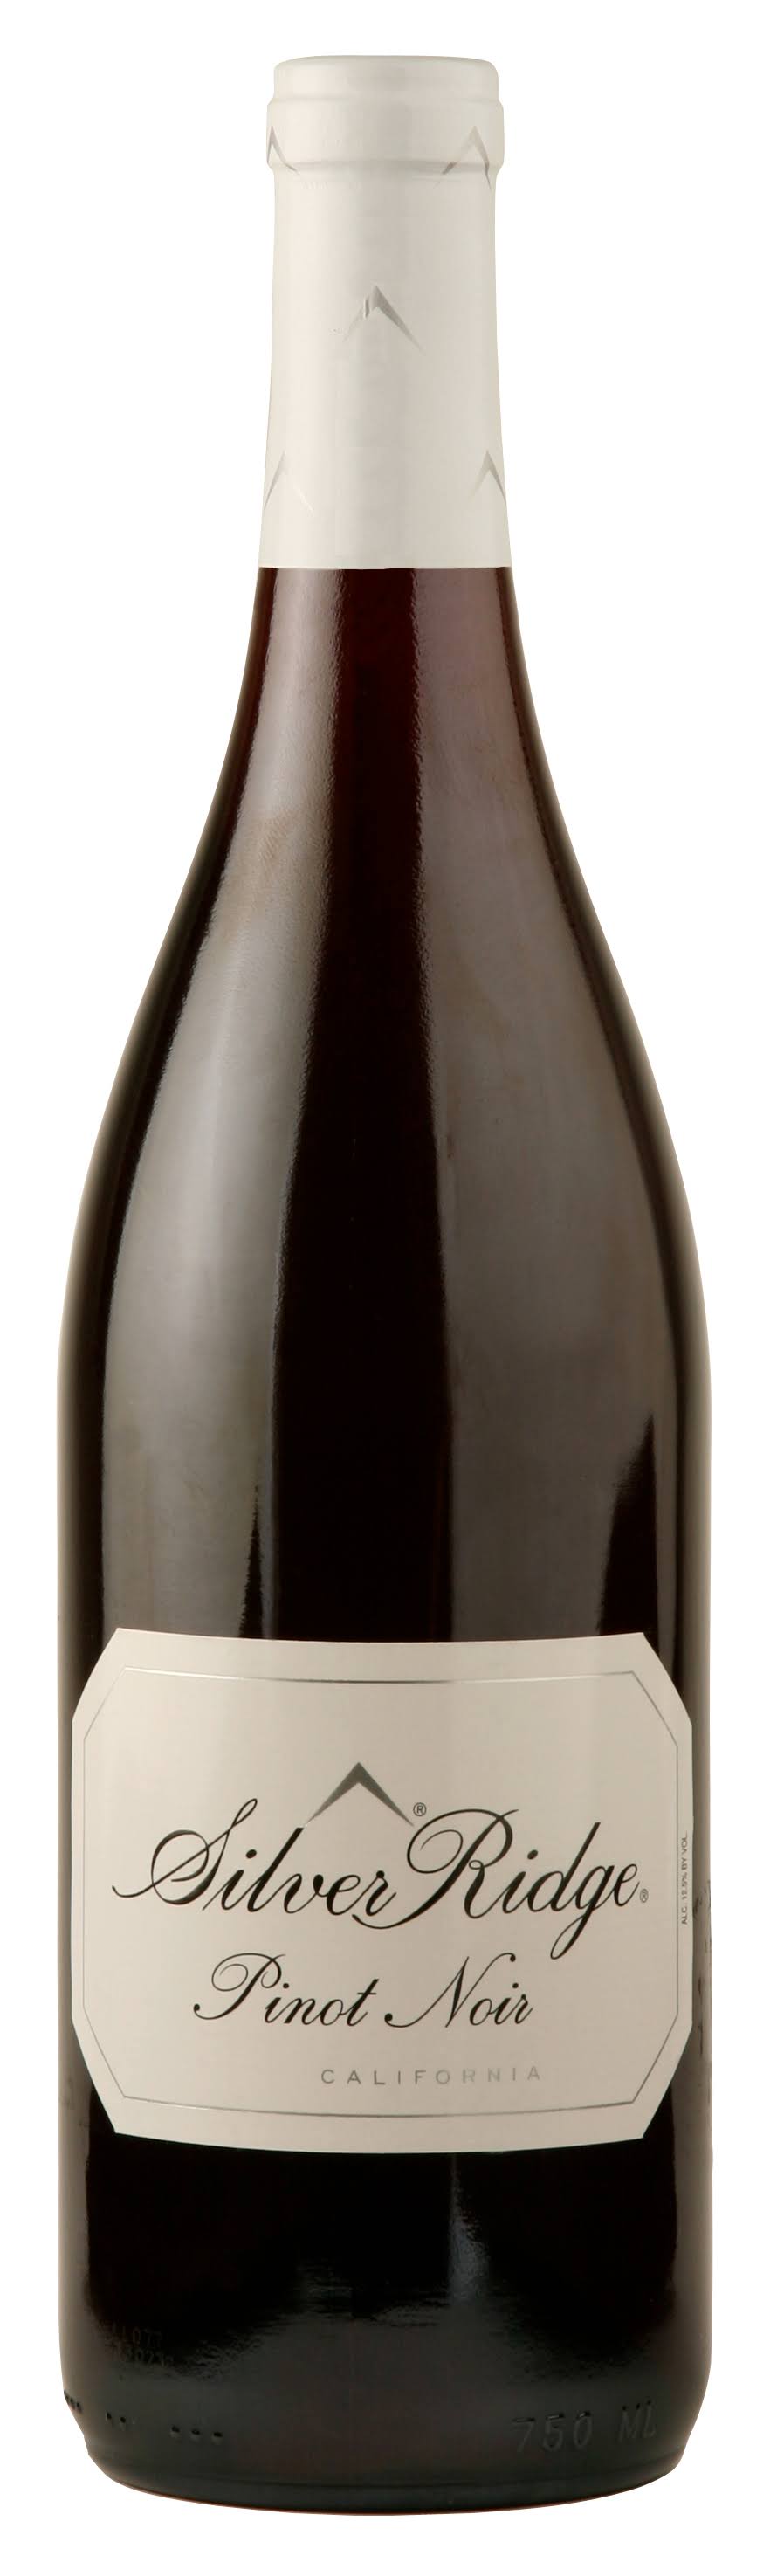 Silver Ridge Pinot Noir, California (Vintage Varies) - 750 ml bottle